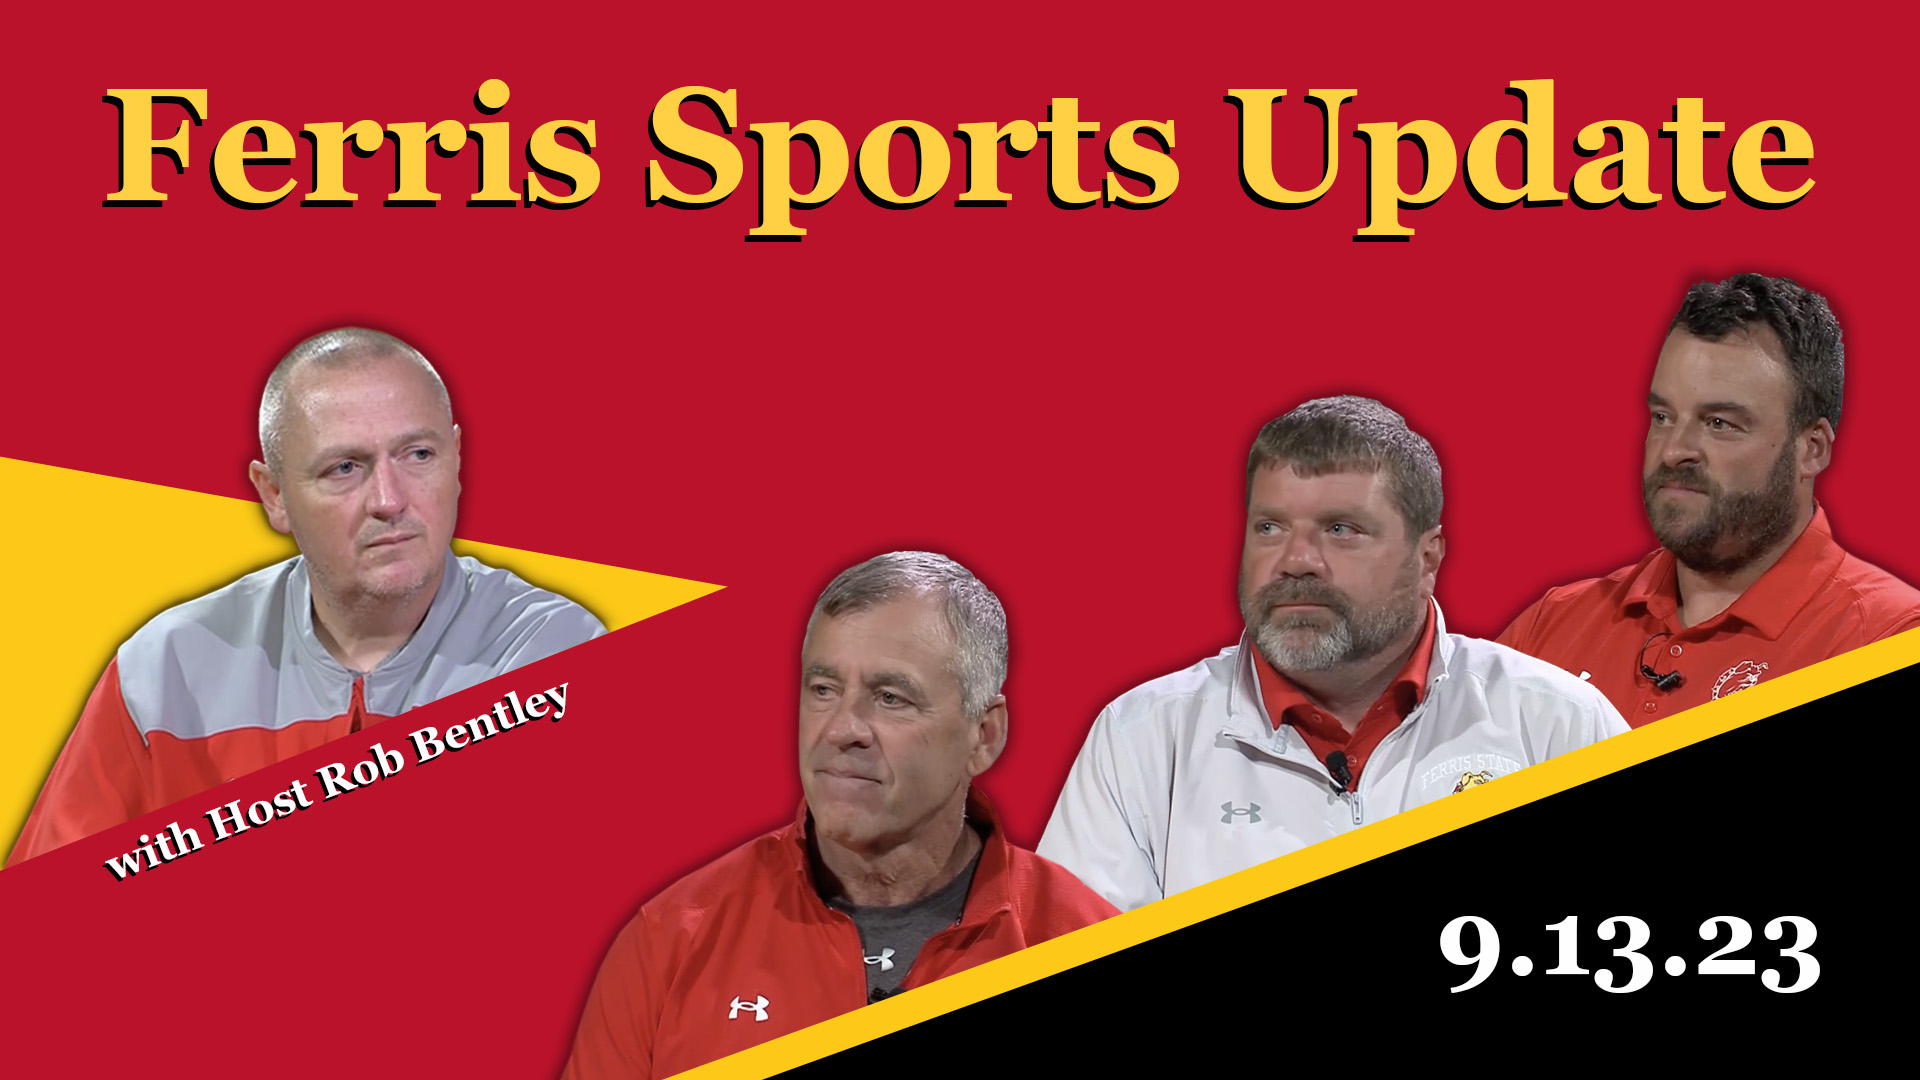 Ferris Sports Update thumbnail 9.13.23